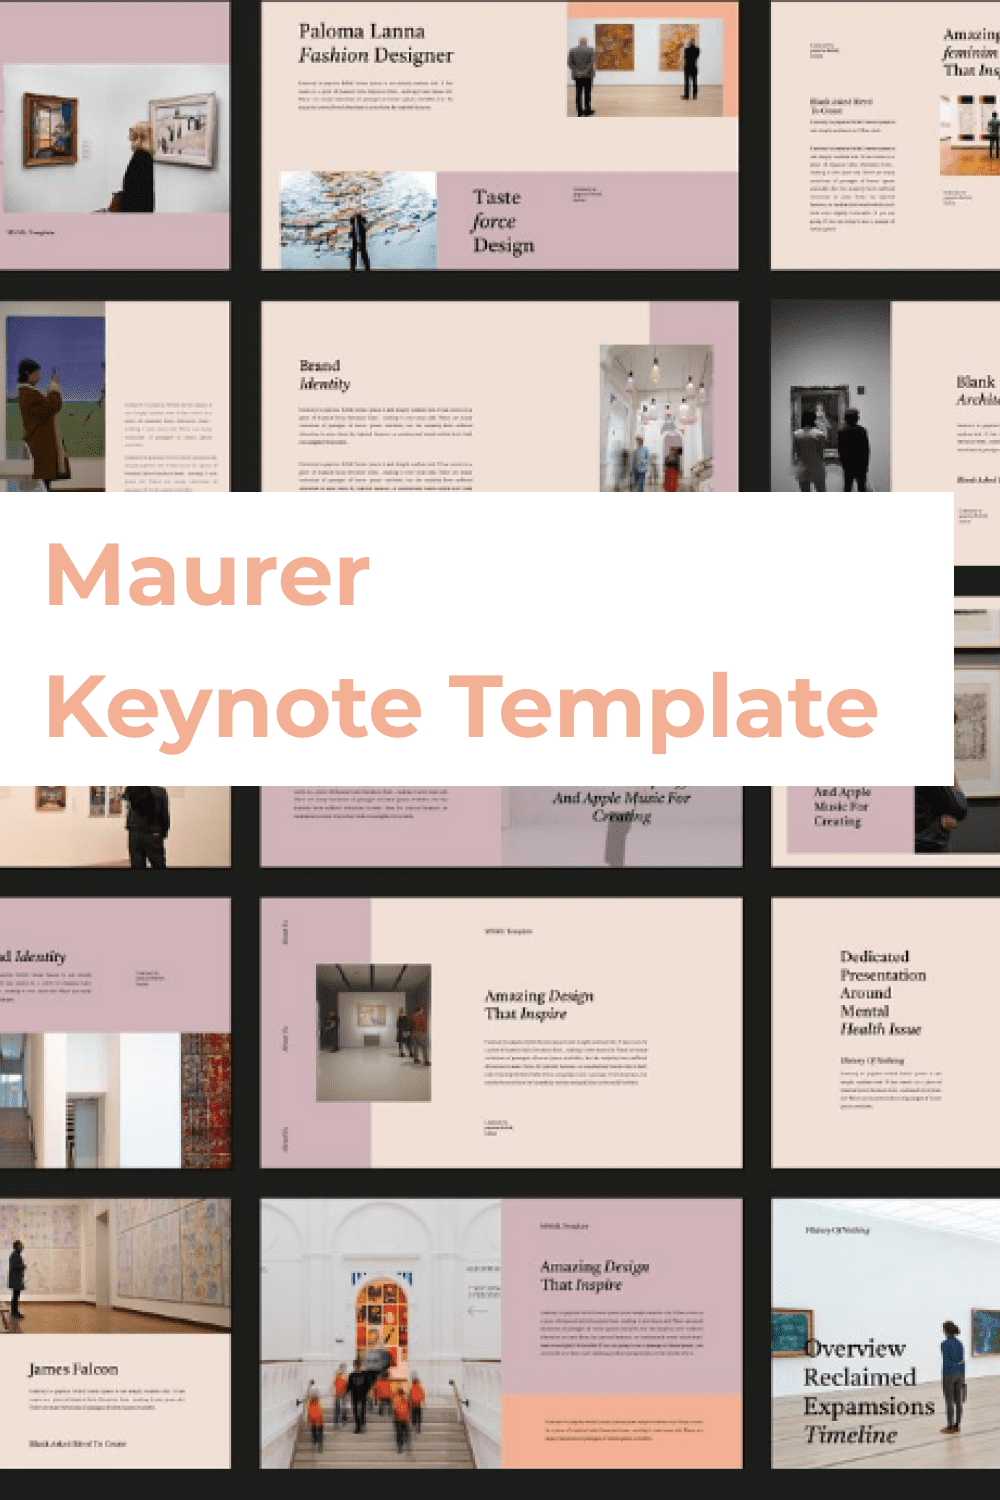 Maurer Keynote Template Pinterest.